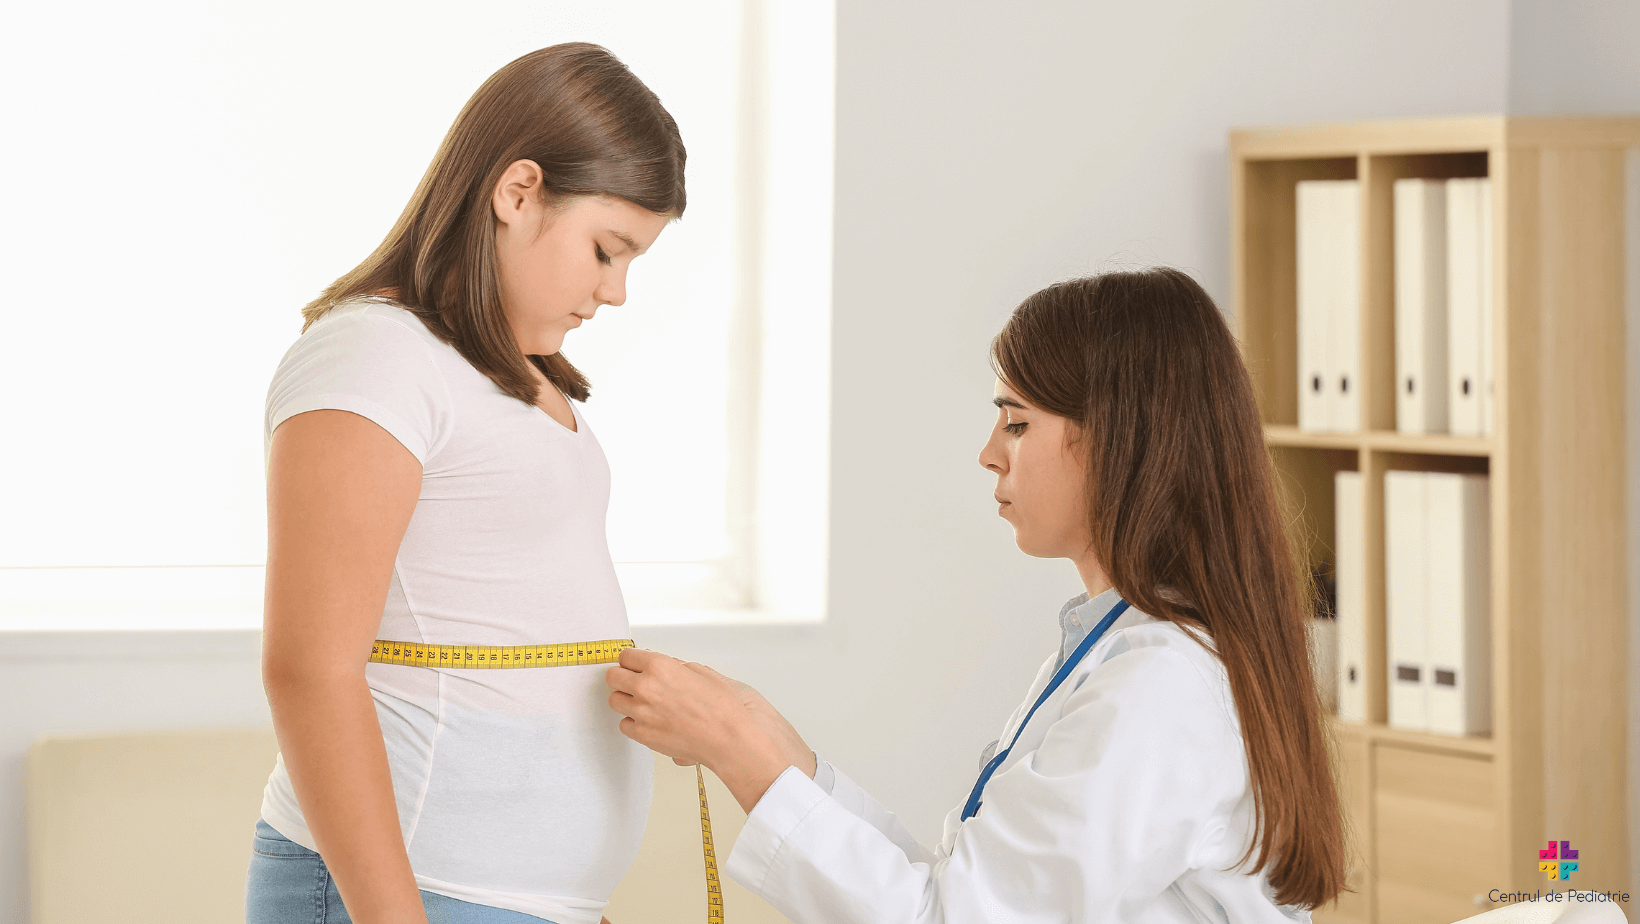 Obezitatea la copil si implicatii medicale. Tratament si solutii